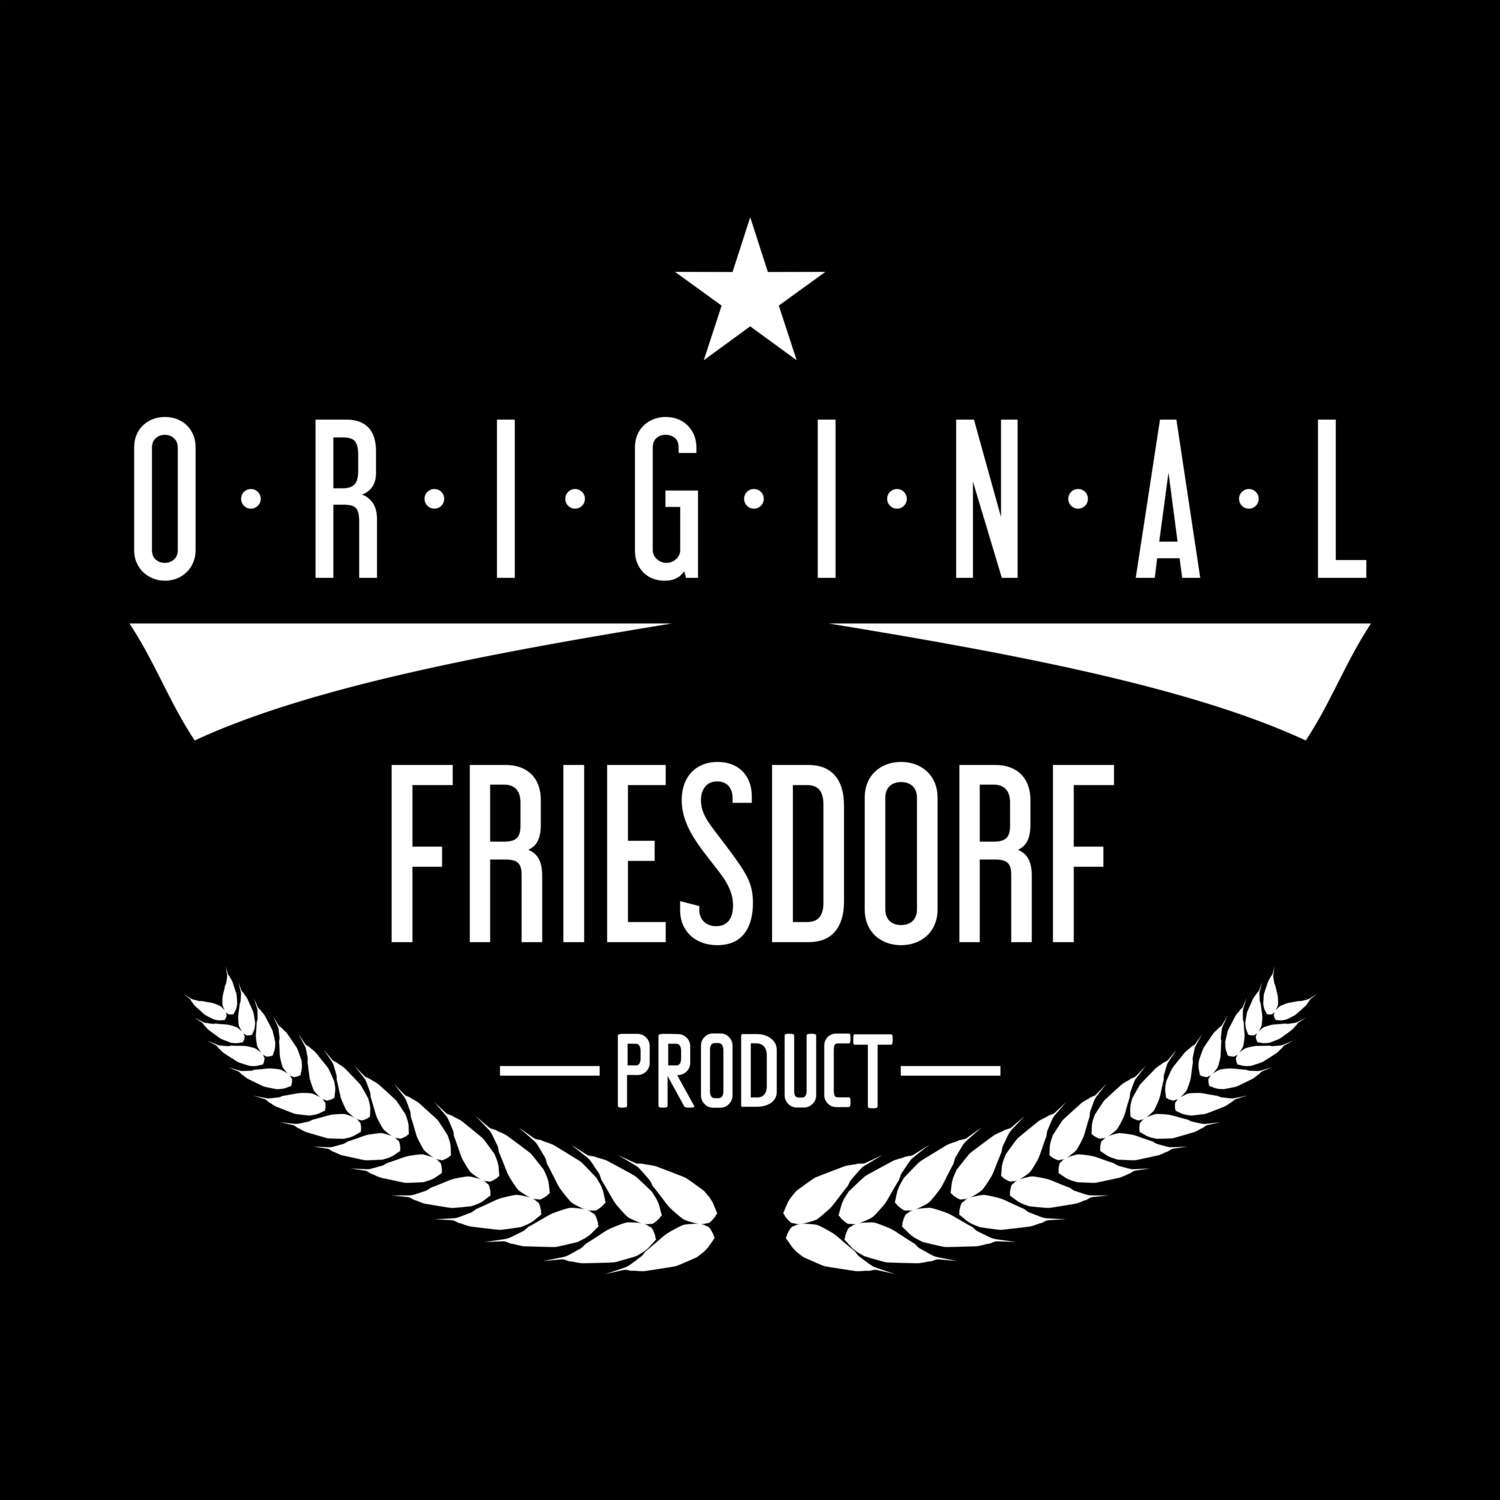 Friesdorf T-Shirt »Original Product«